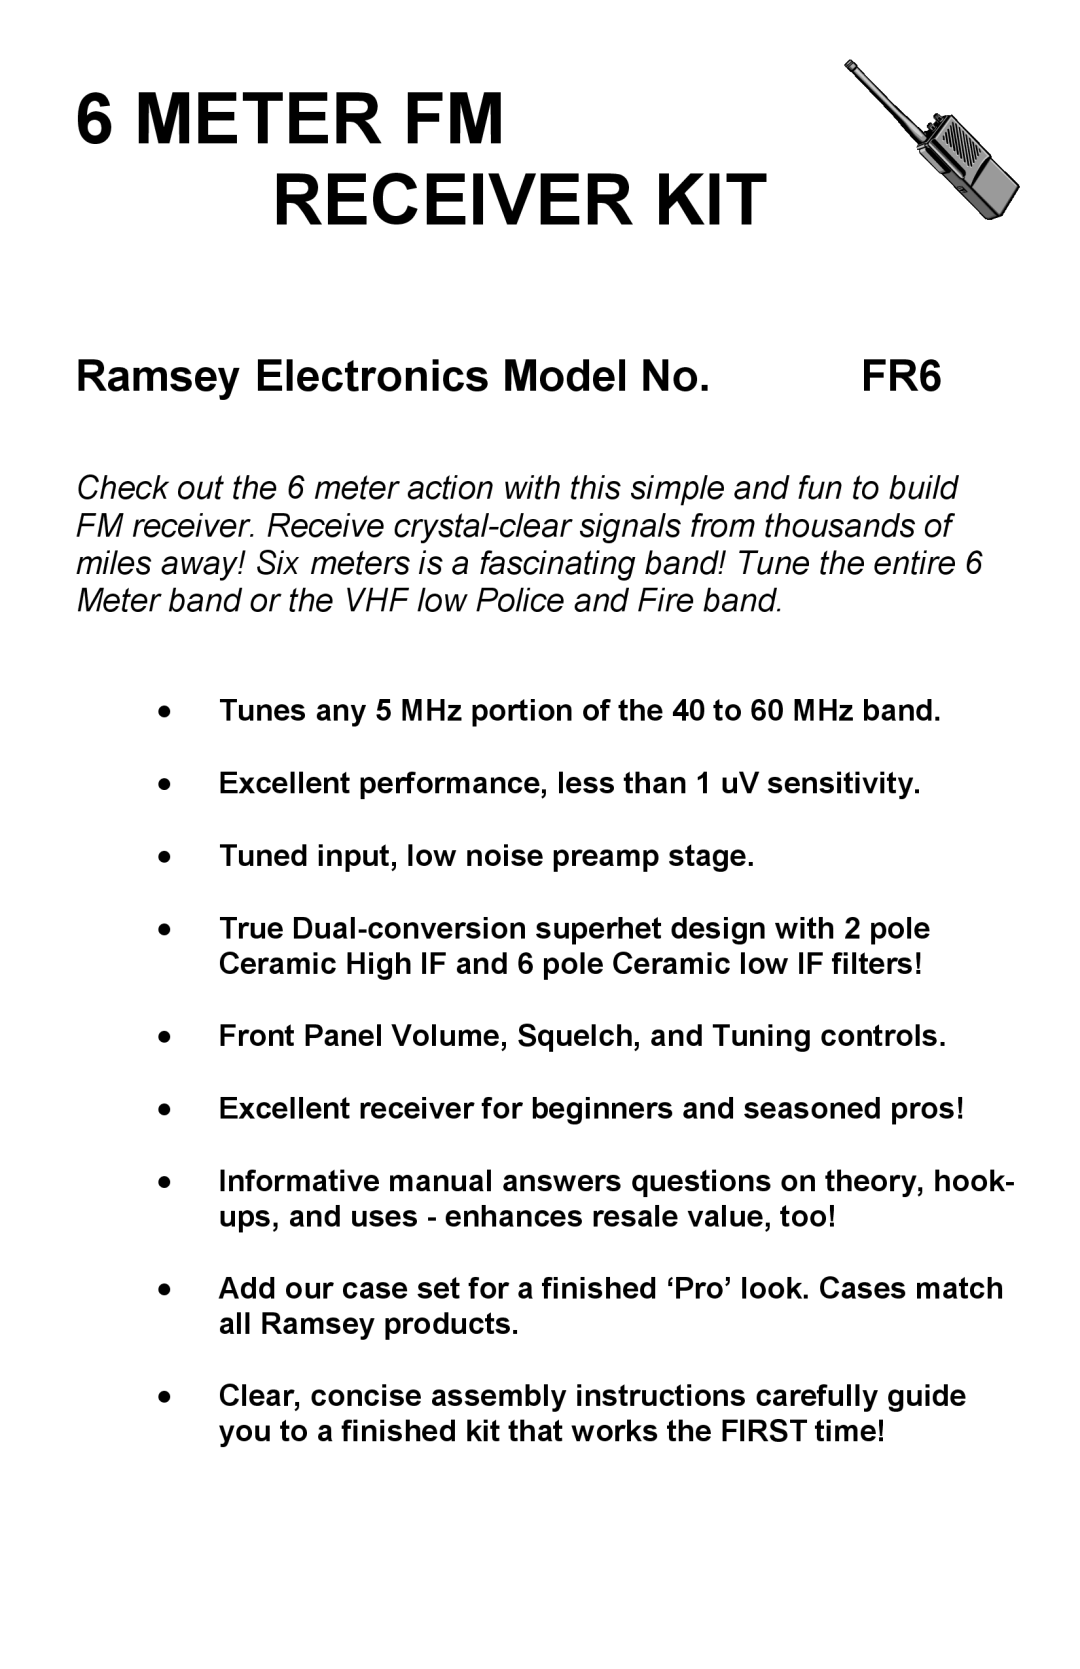 Ramsey Electronics FR6 manual Meter Fm Receiver Kit, Ramsey Electronics Model No 